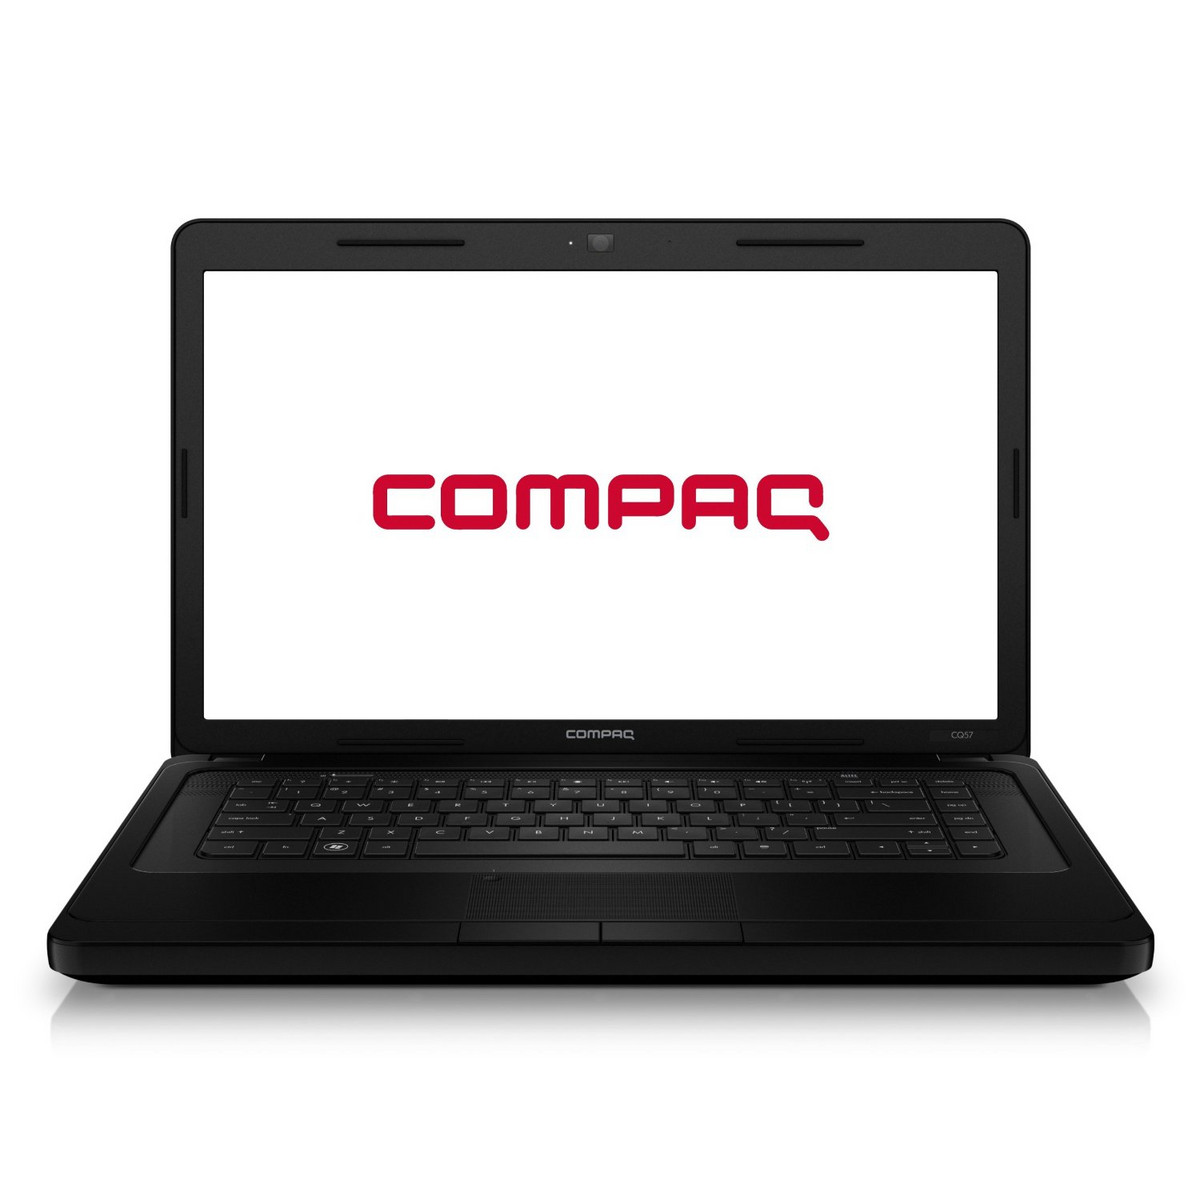 HP Compaq Presario CQ58 Series - Notebookcheck.net External Reviews